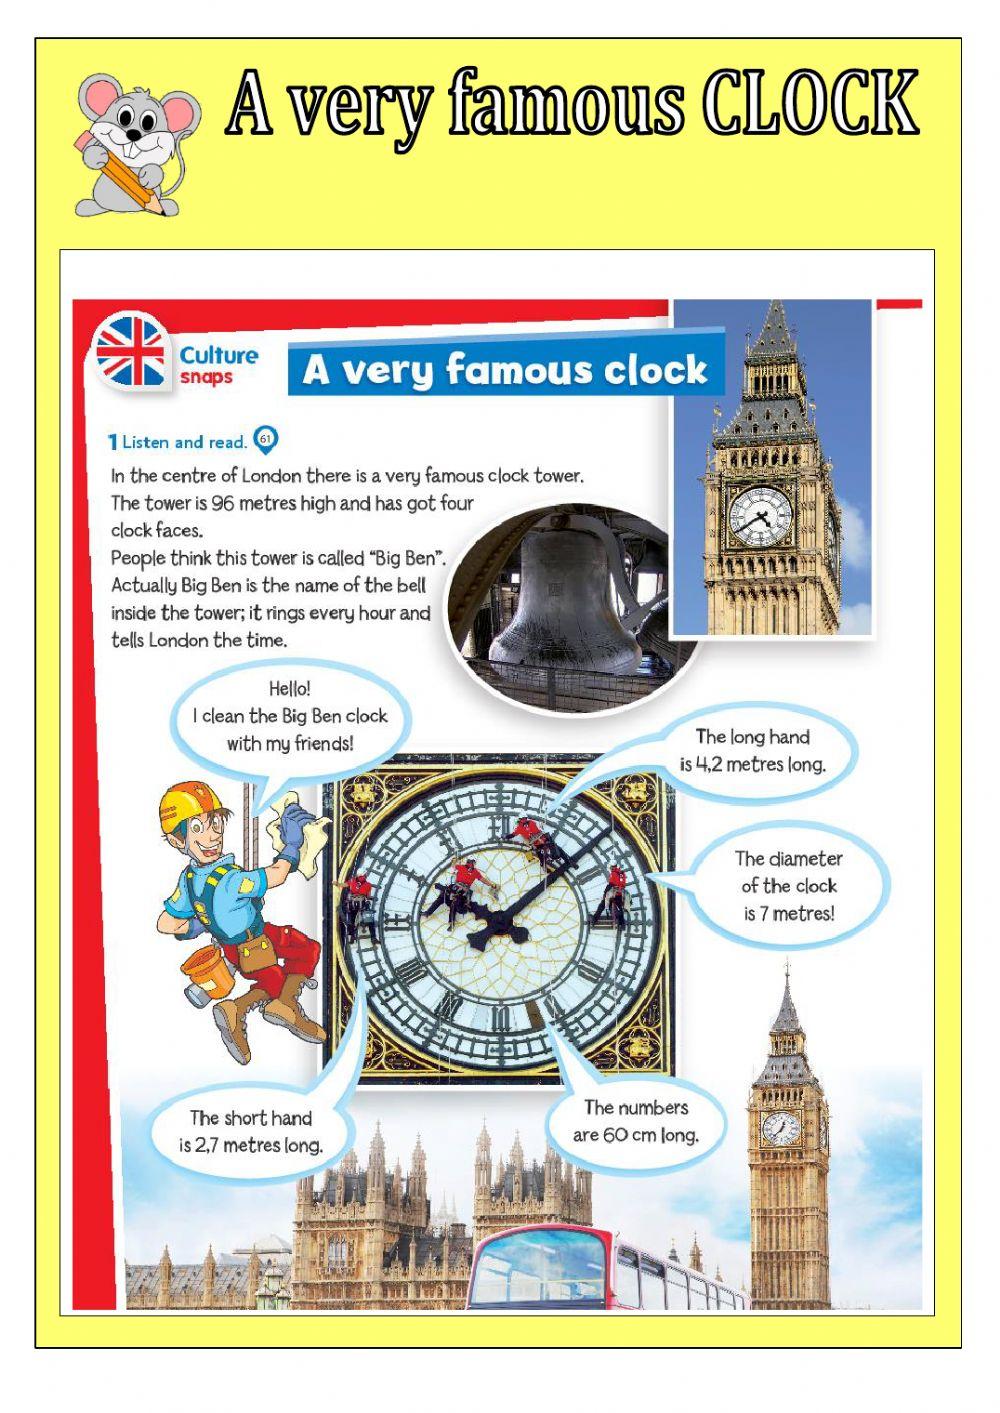 A famous clock